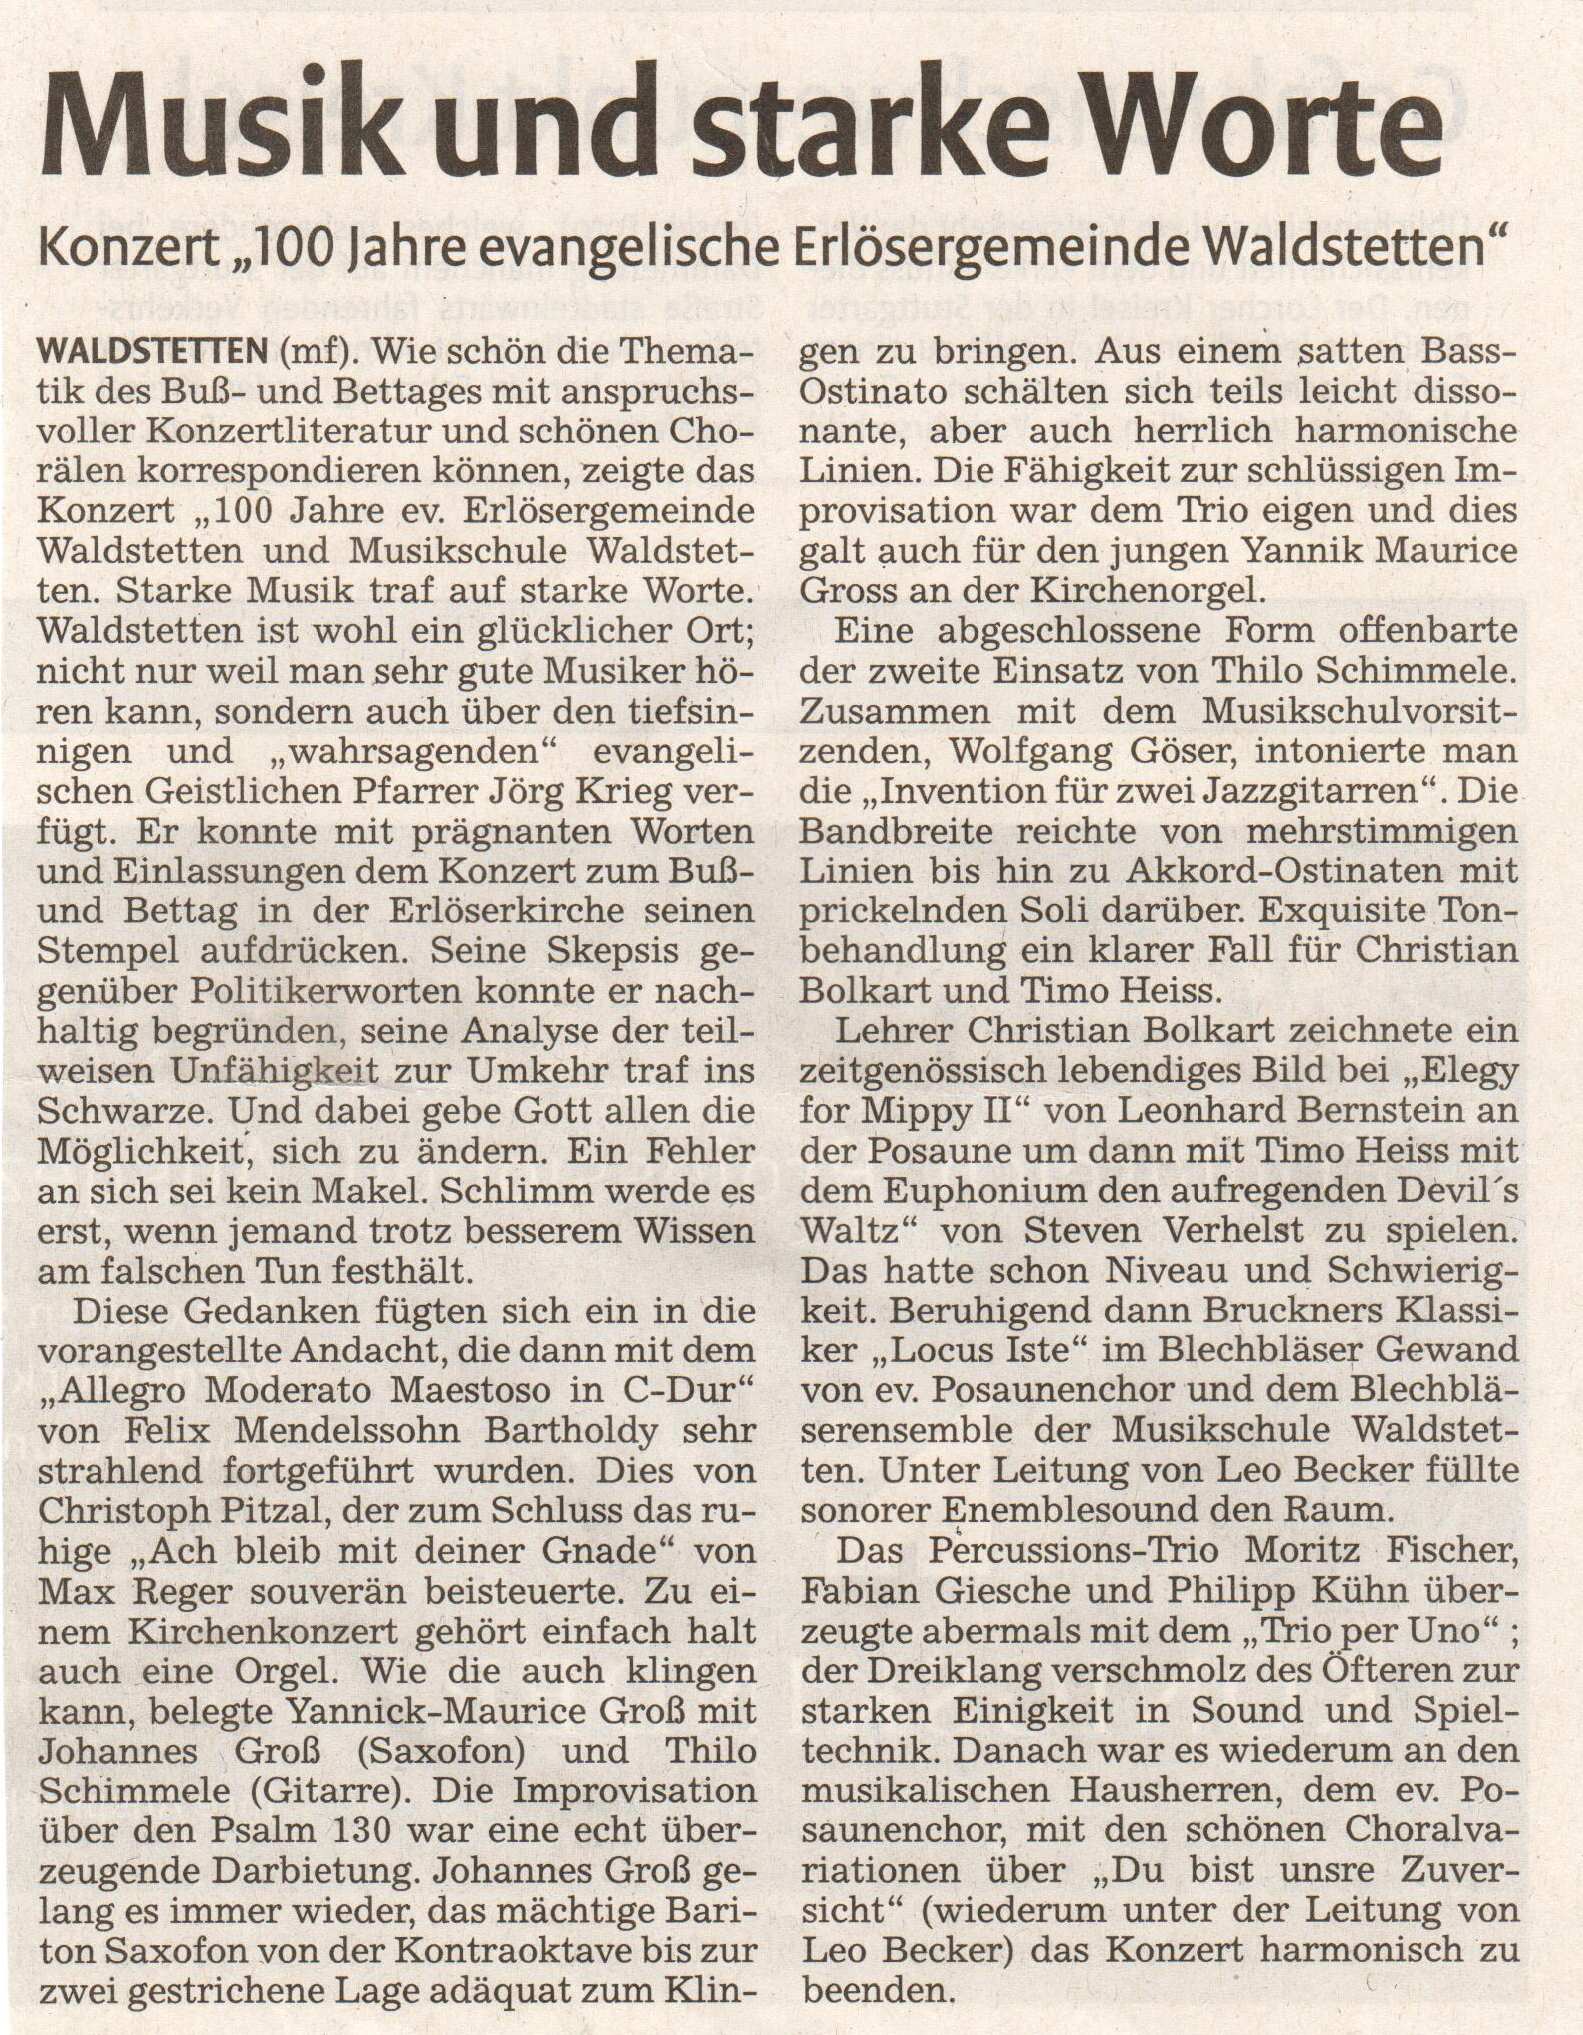  Pressebericht, Rems Zeitung, 01.12.2018 